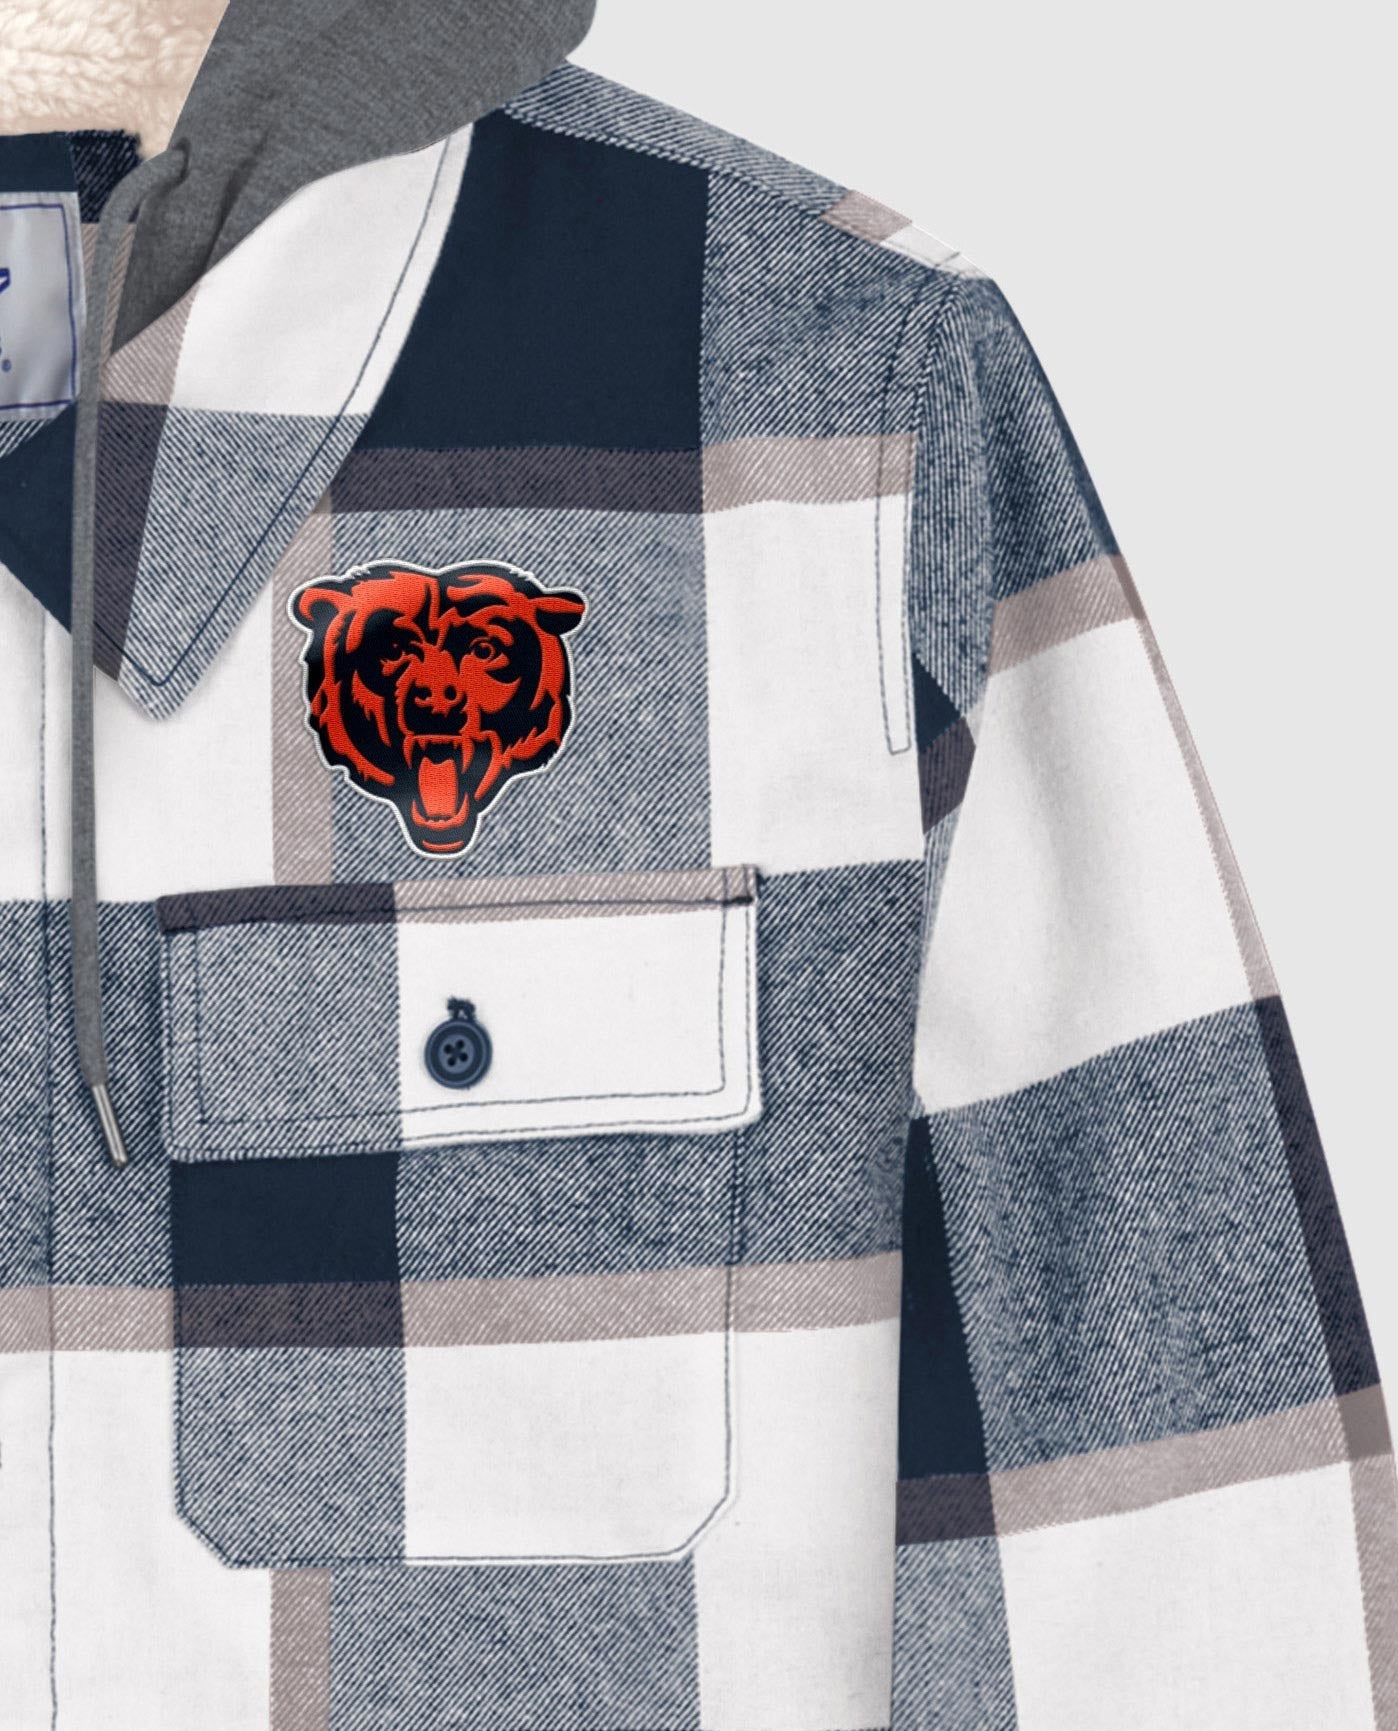 Chicago Bears Twill Applique Logo Above Left Pocket | Bears Navy